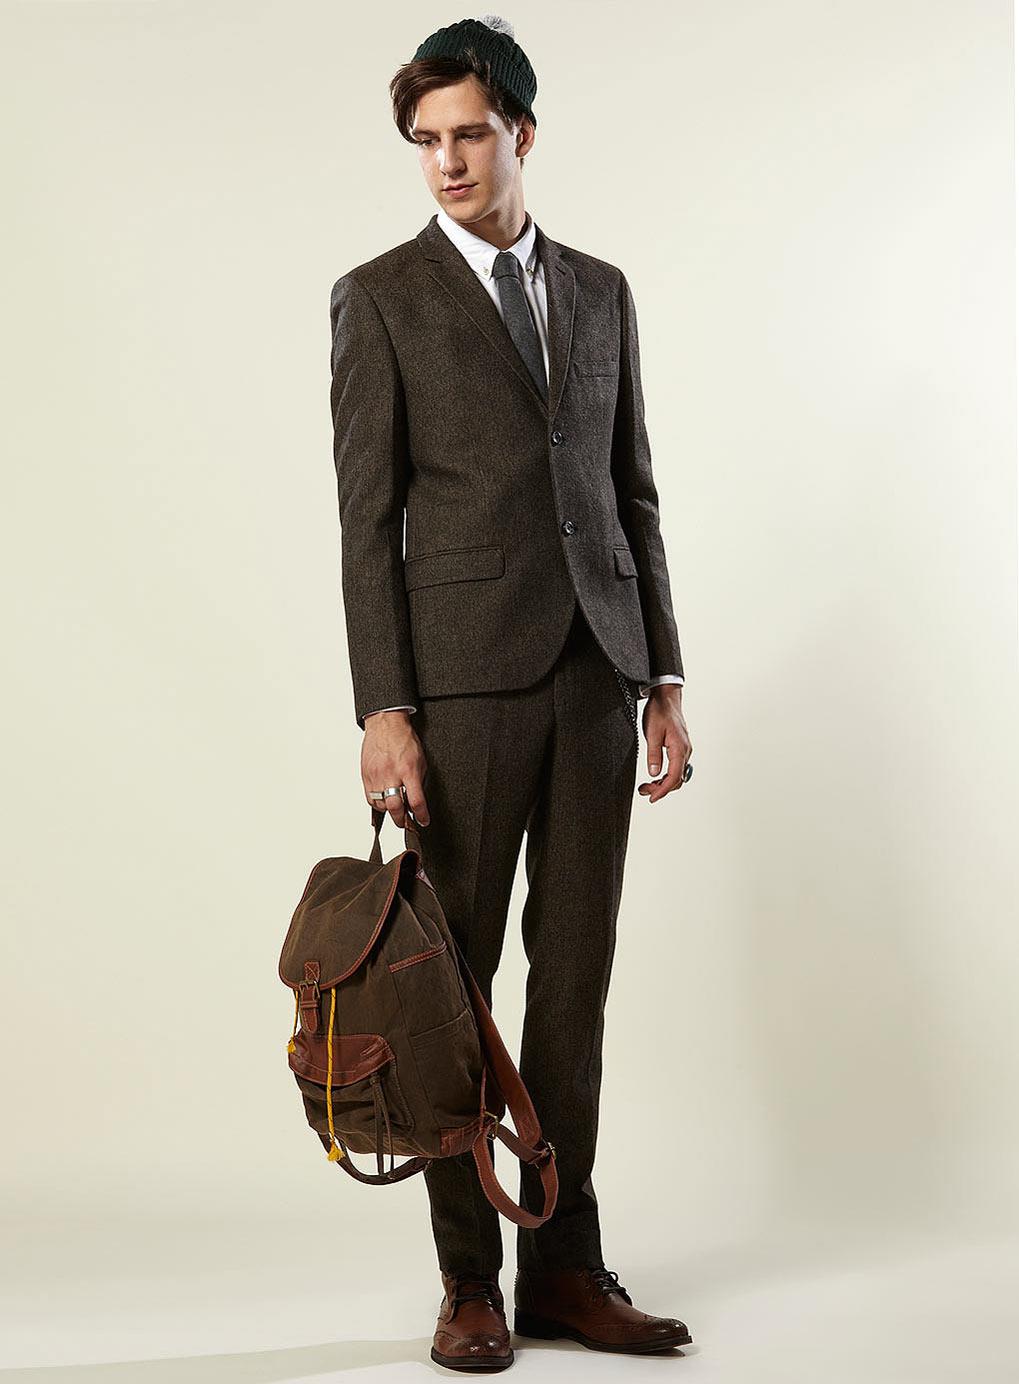 Men's Fashion & Style Aficionado: Men's Suiting from Topman